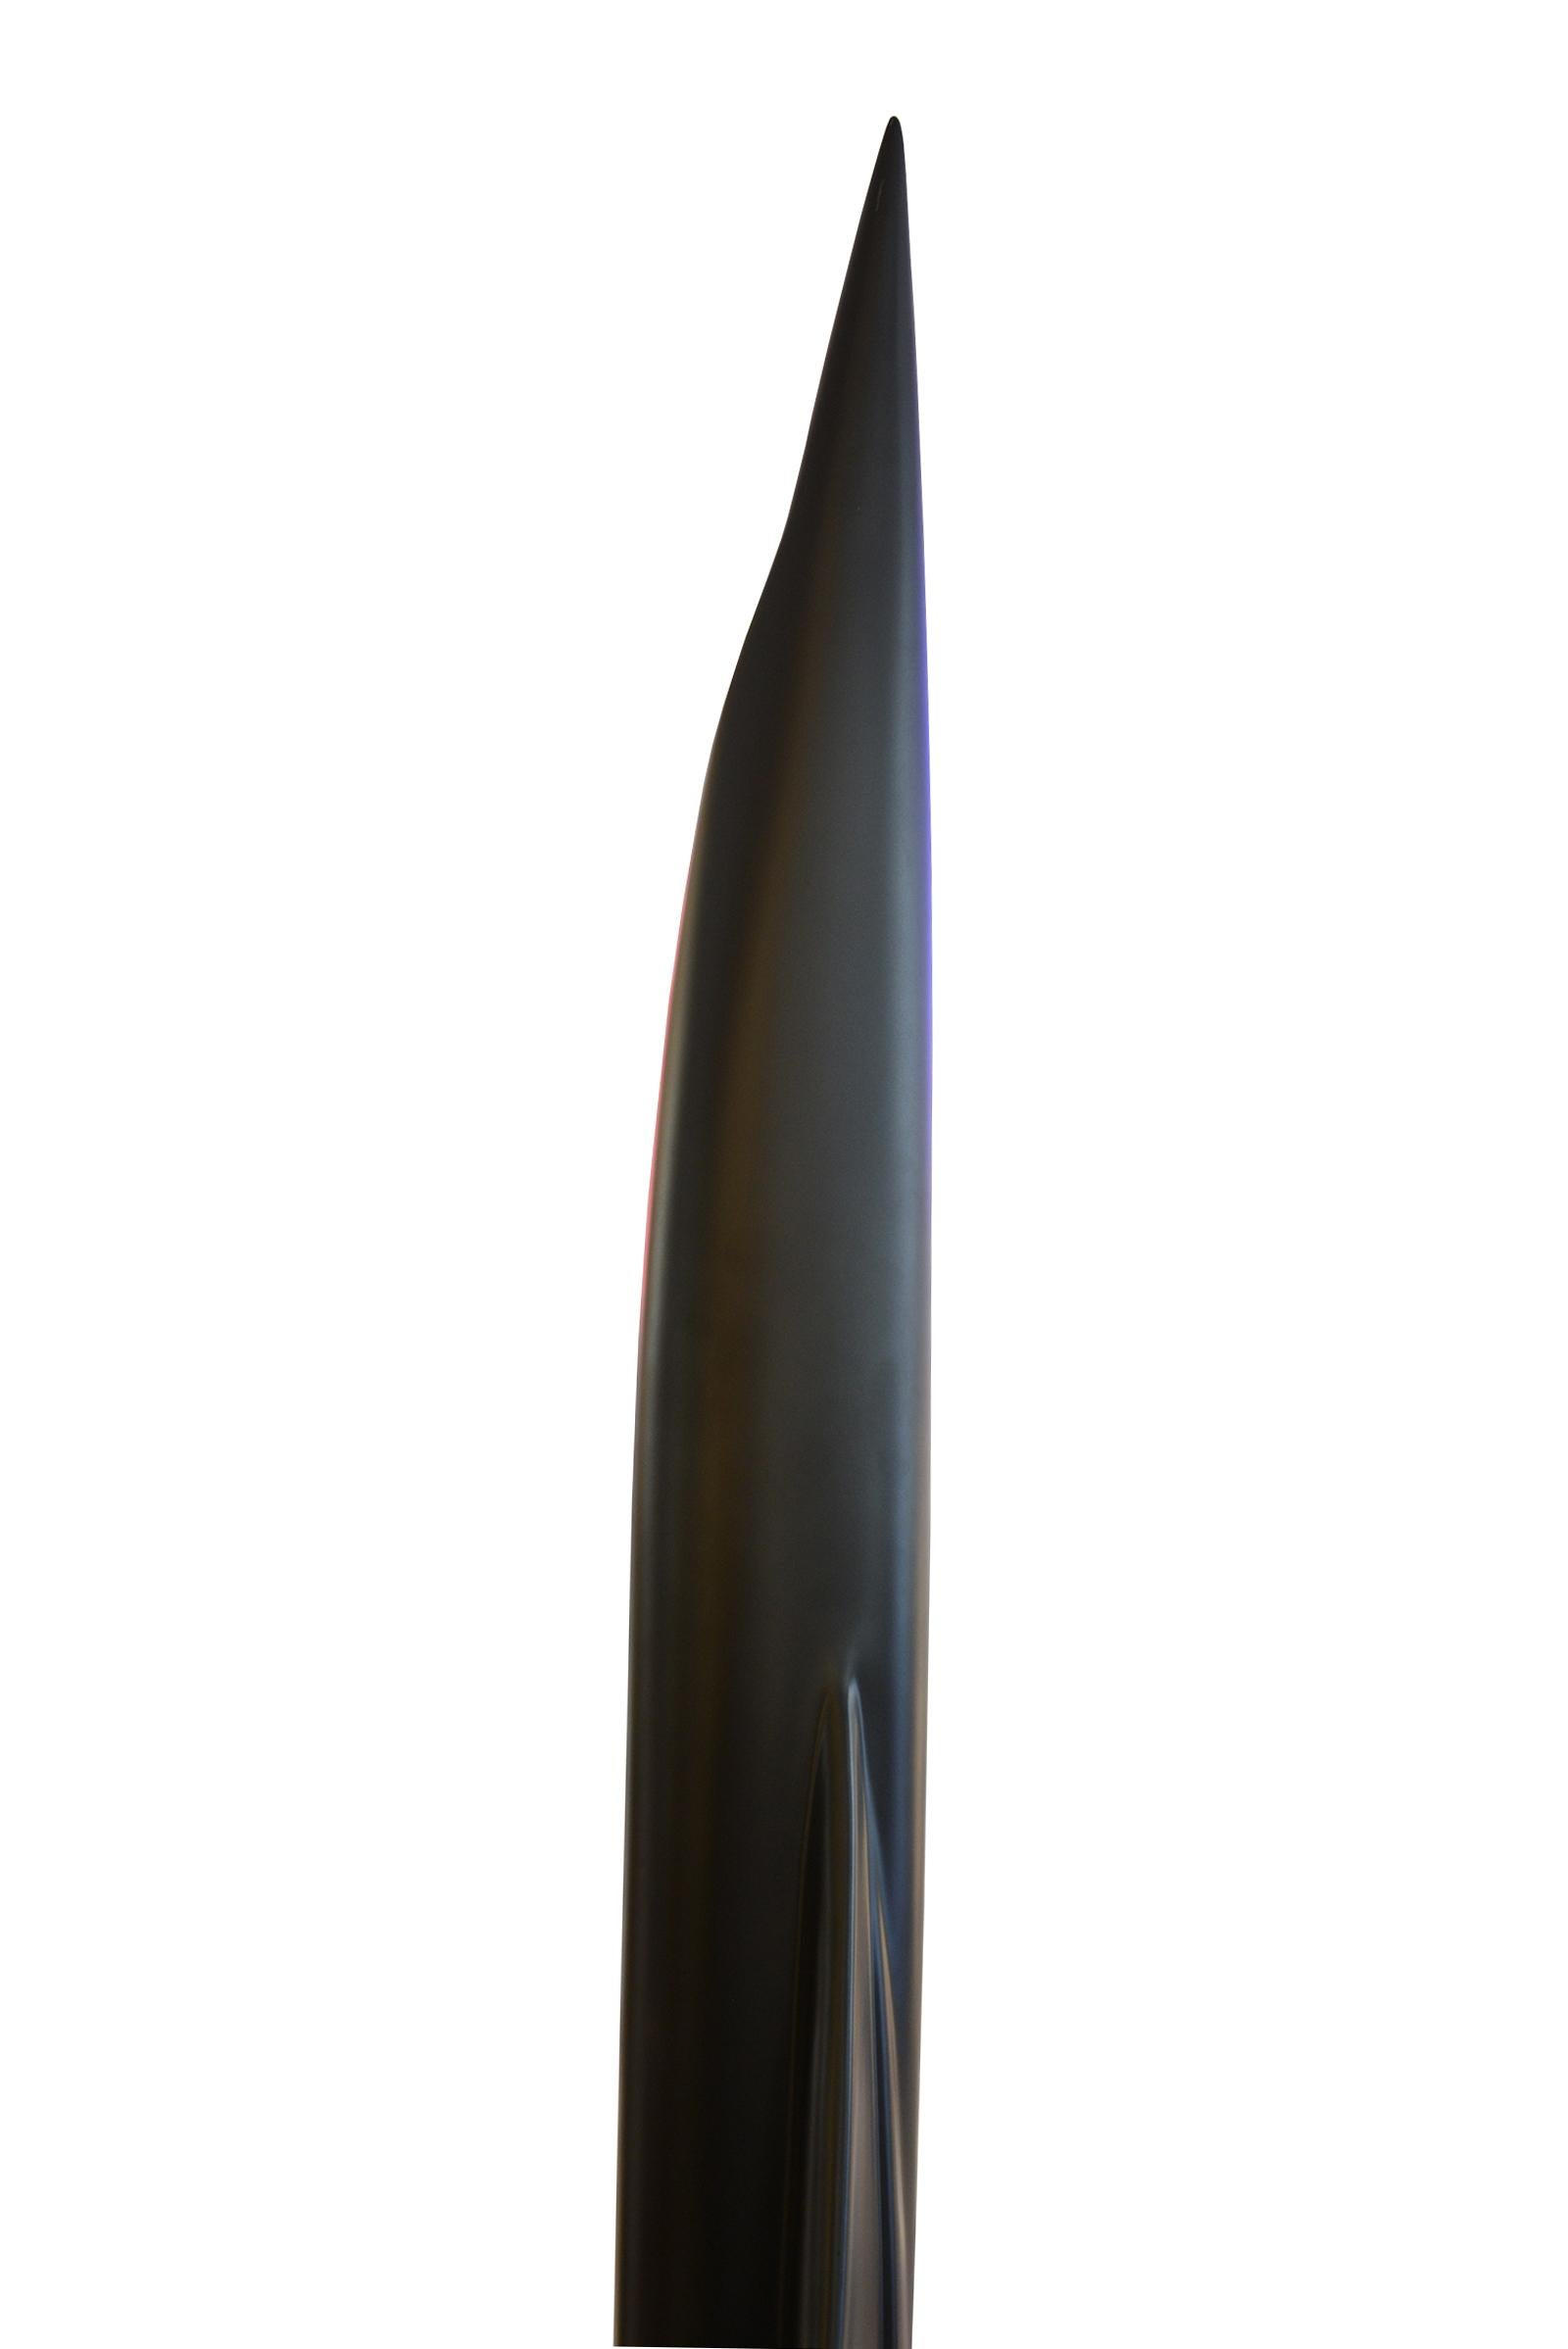 Contemporary Concorde Model Black Sculpture For Sale